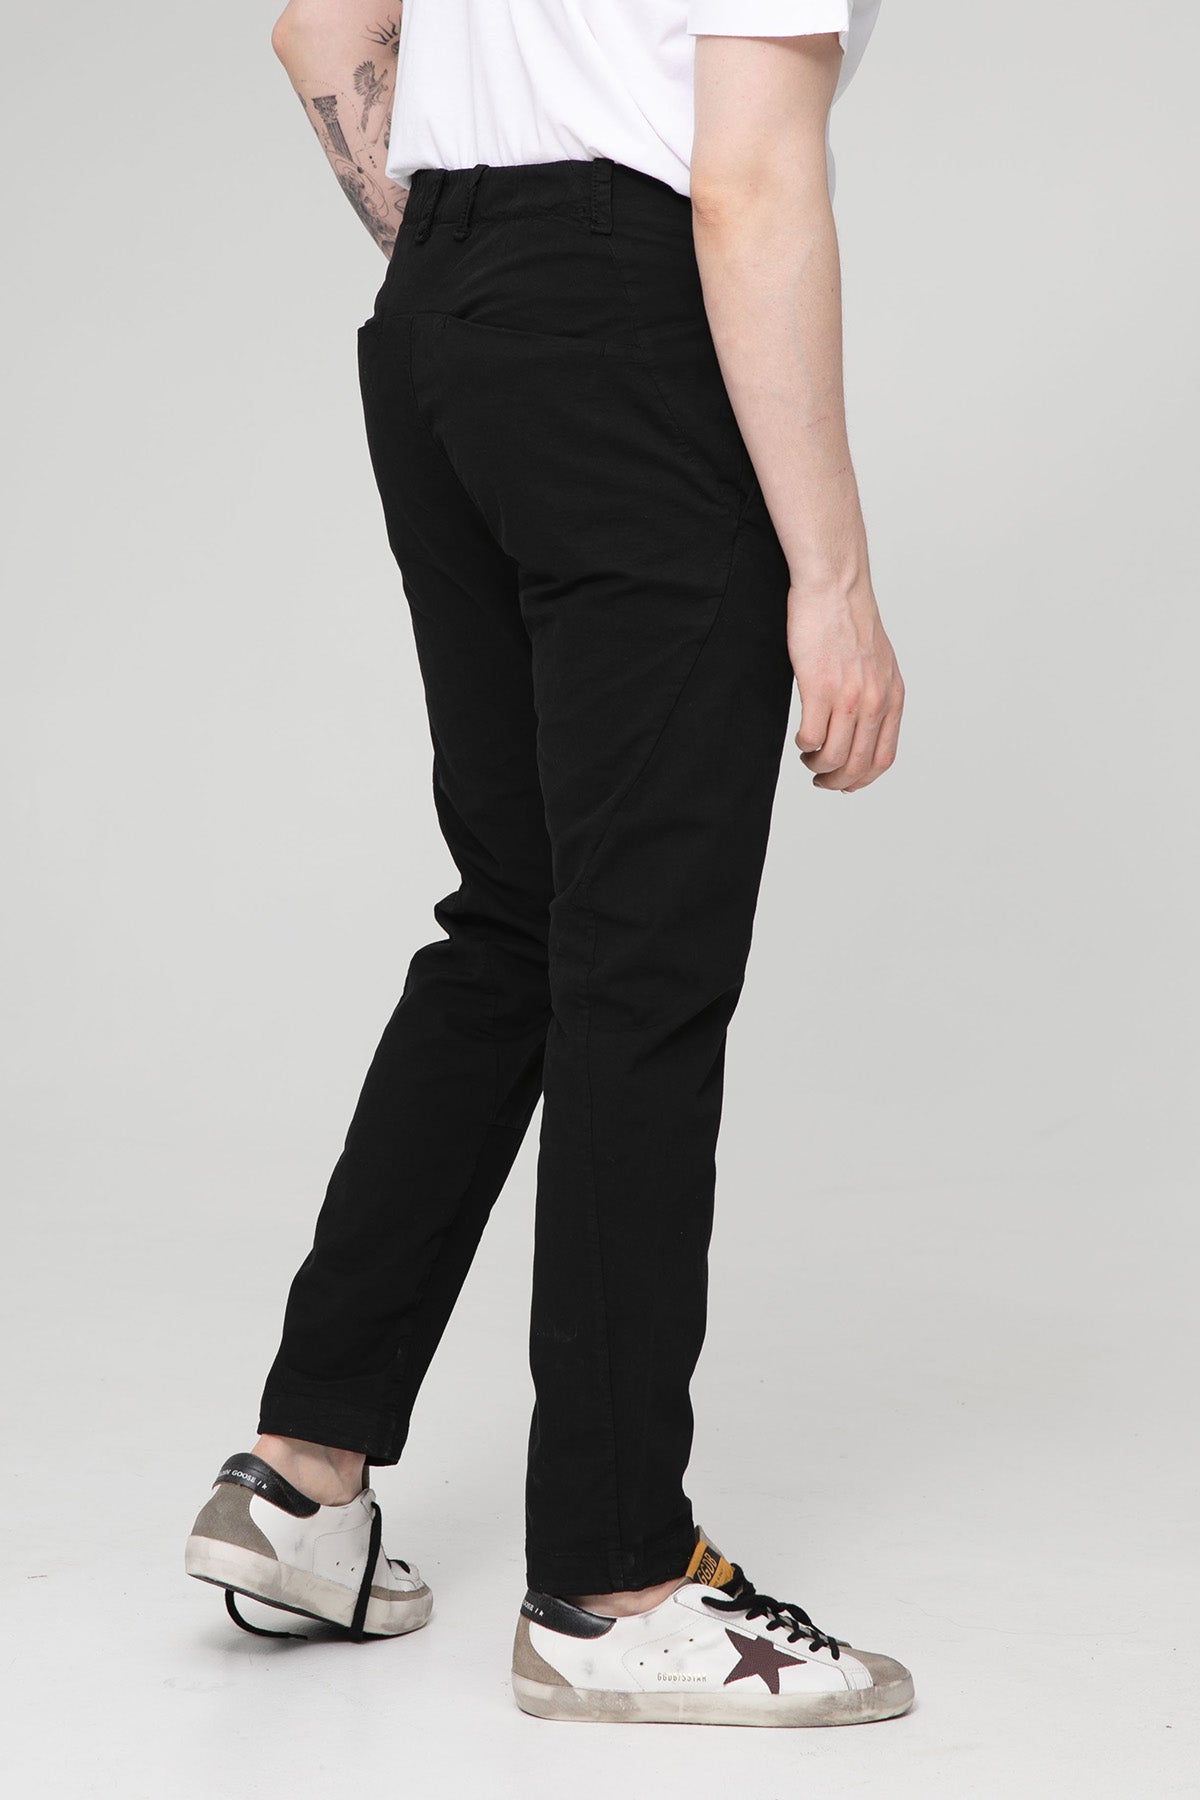 Transit Yandan Cepli Beli Lastikli Pantolon-Libas Trendy Fashion Store